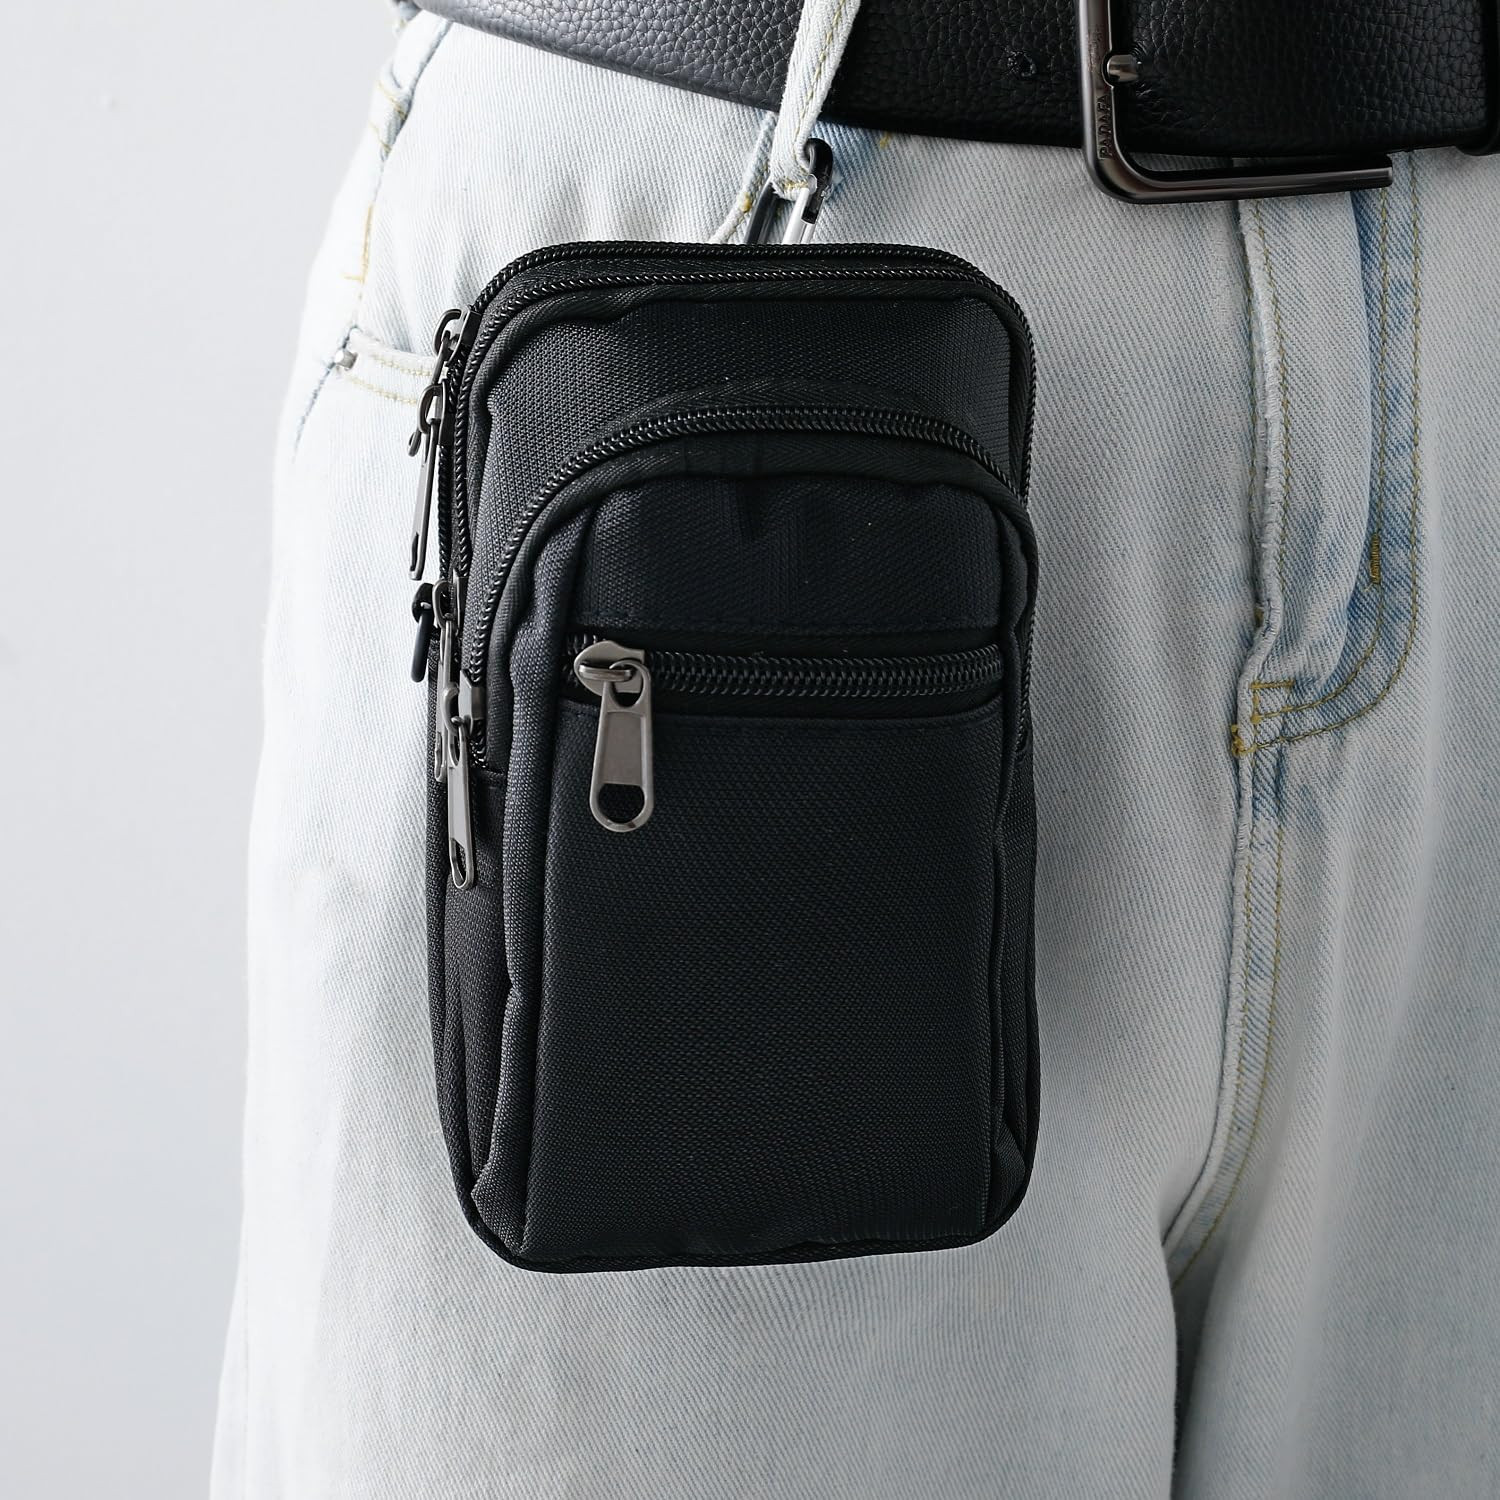 Kuber Industries Paspport Holder for Men & Women|Multifunction Passport Cover Bag|Nylon Passport Pouch for Luggage (Black)